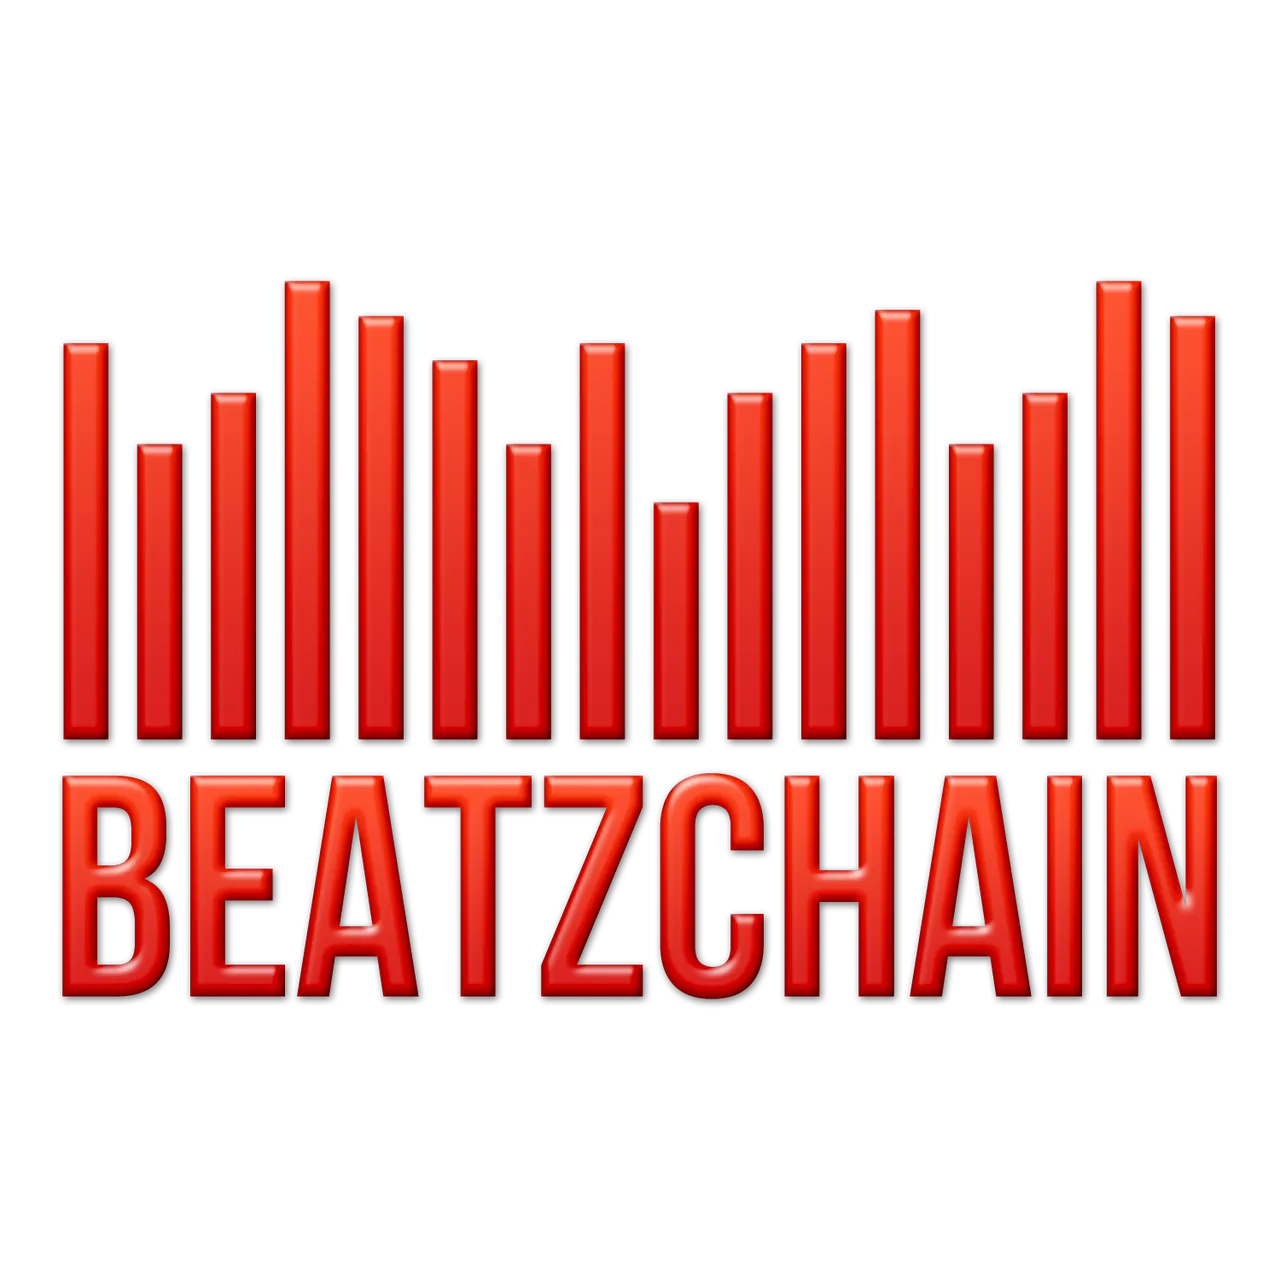 3 Beatzchain image.png